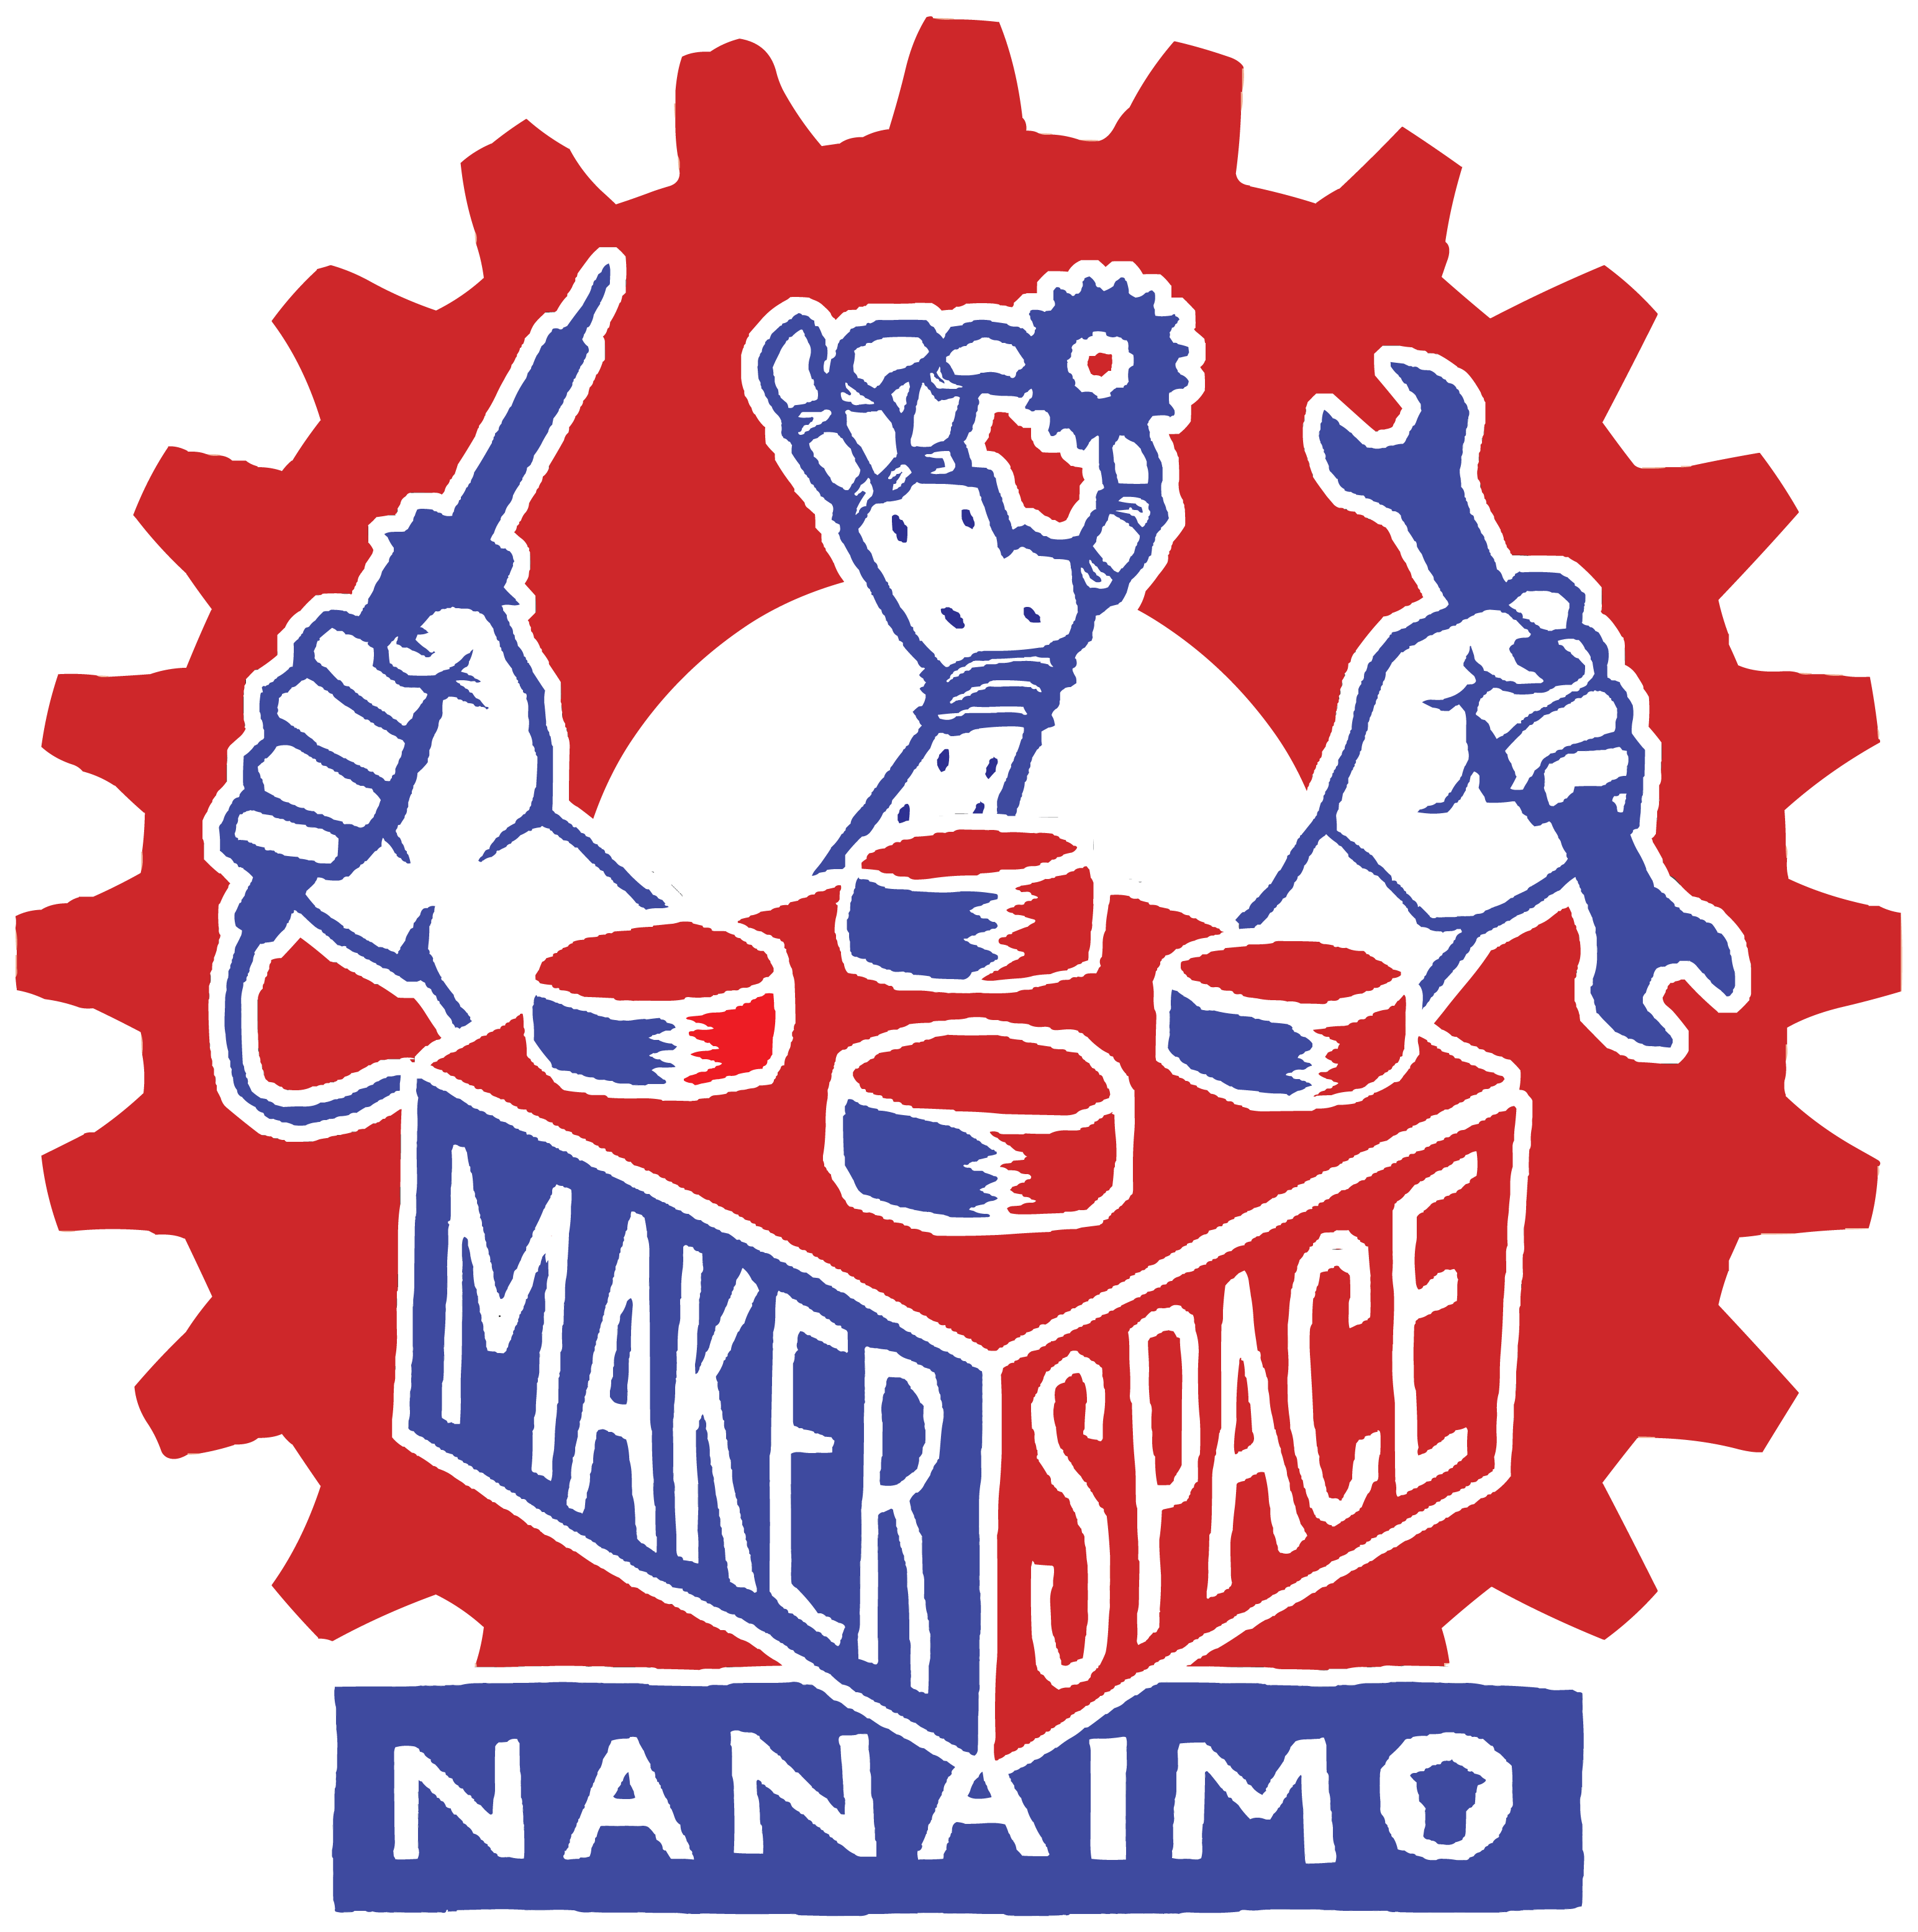 Makerspace Nanaimo Logo full recolor.png